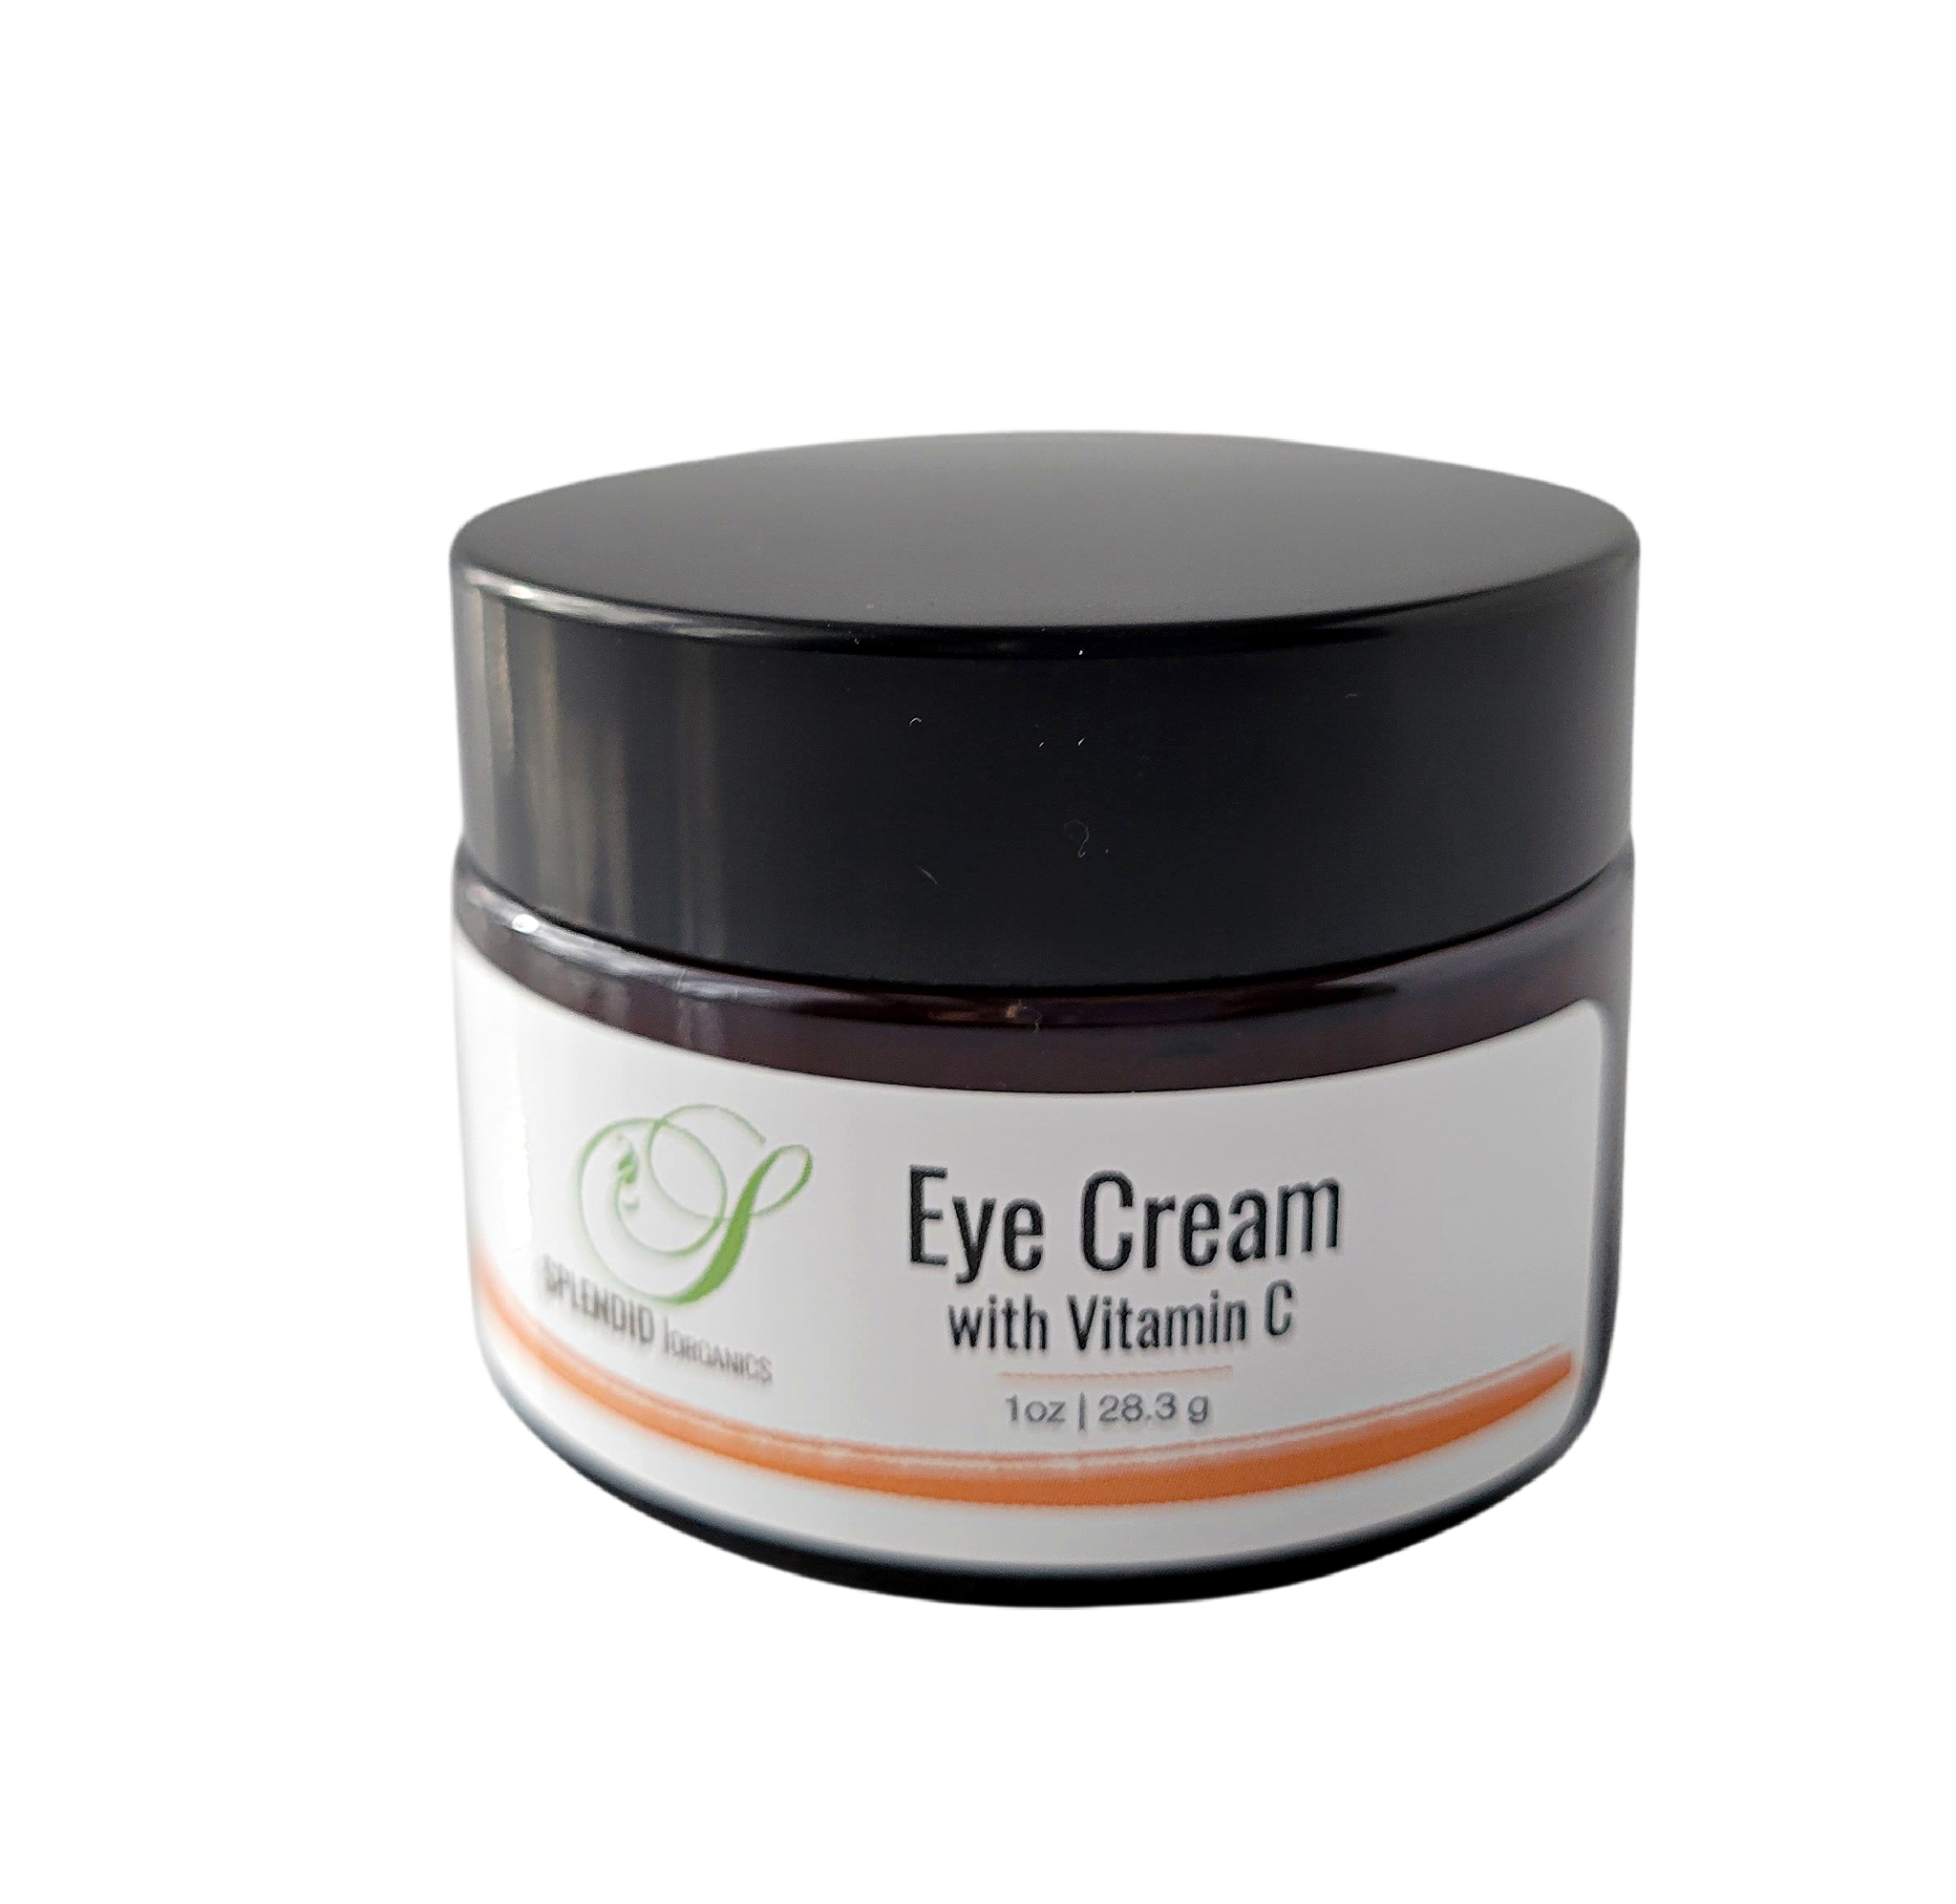 Eye Cream with Vitamin C